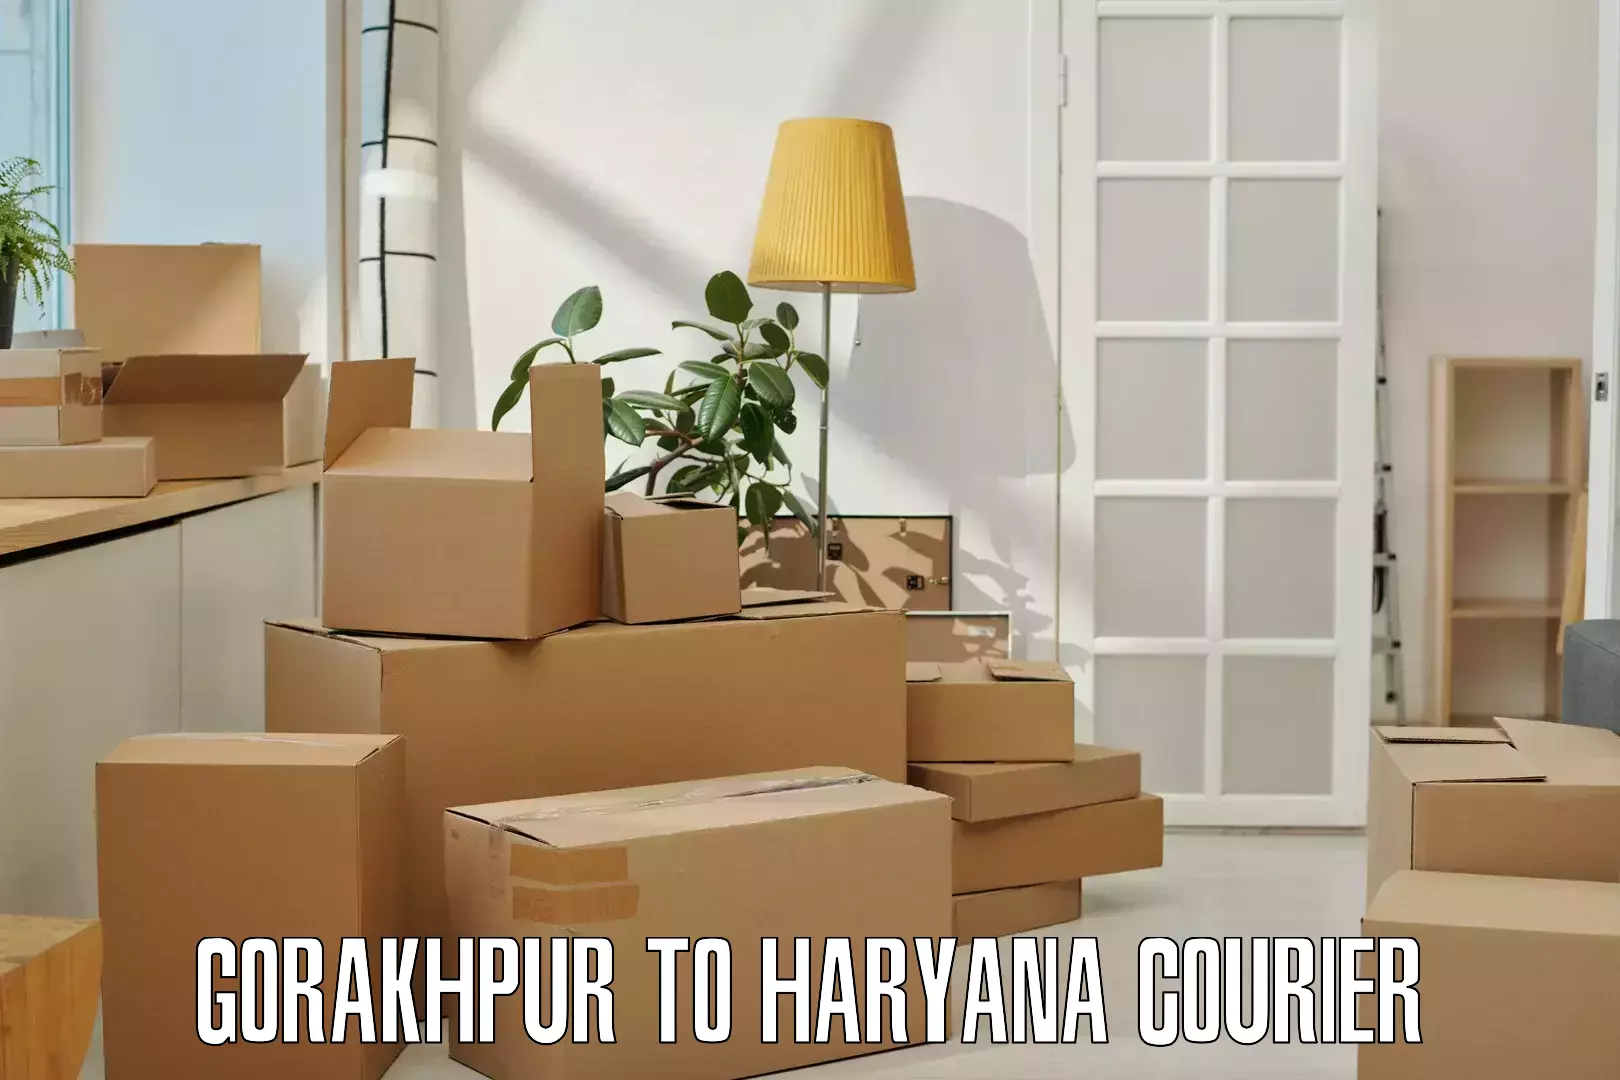 User-friendly courier app Gorakhpur to Odhan